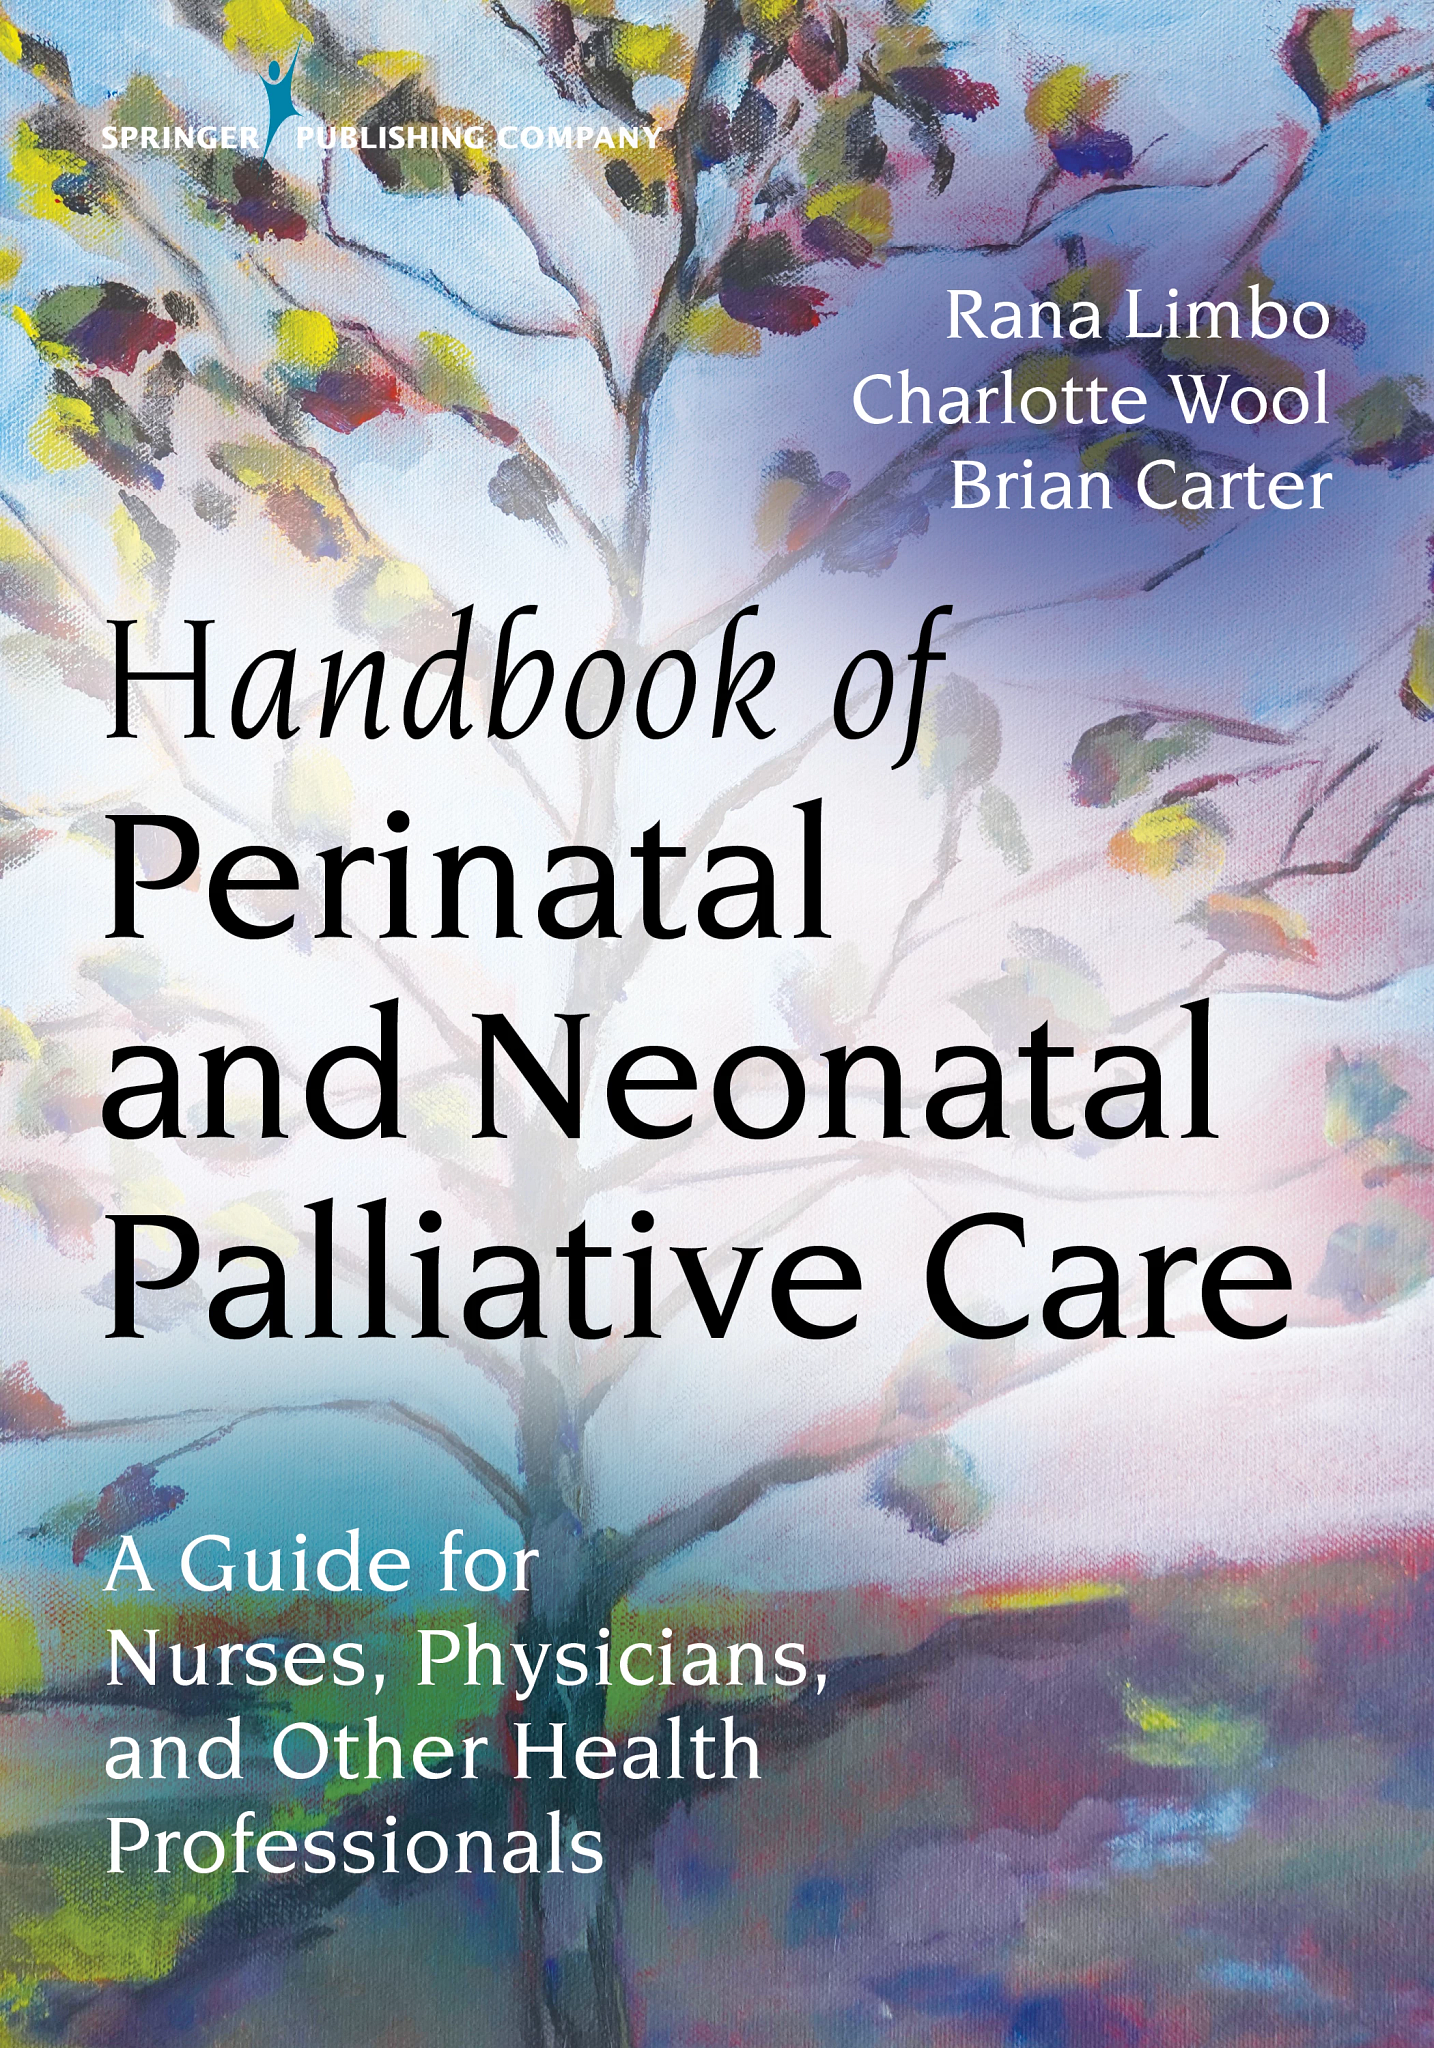 Cover of Perinatal and Neonatal Palliative Care ebook.